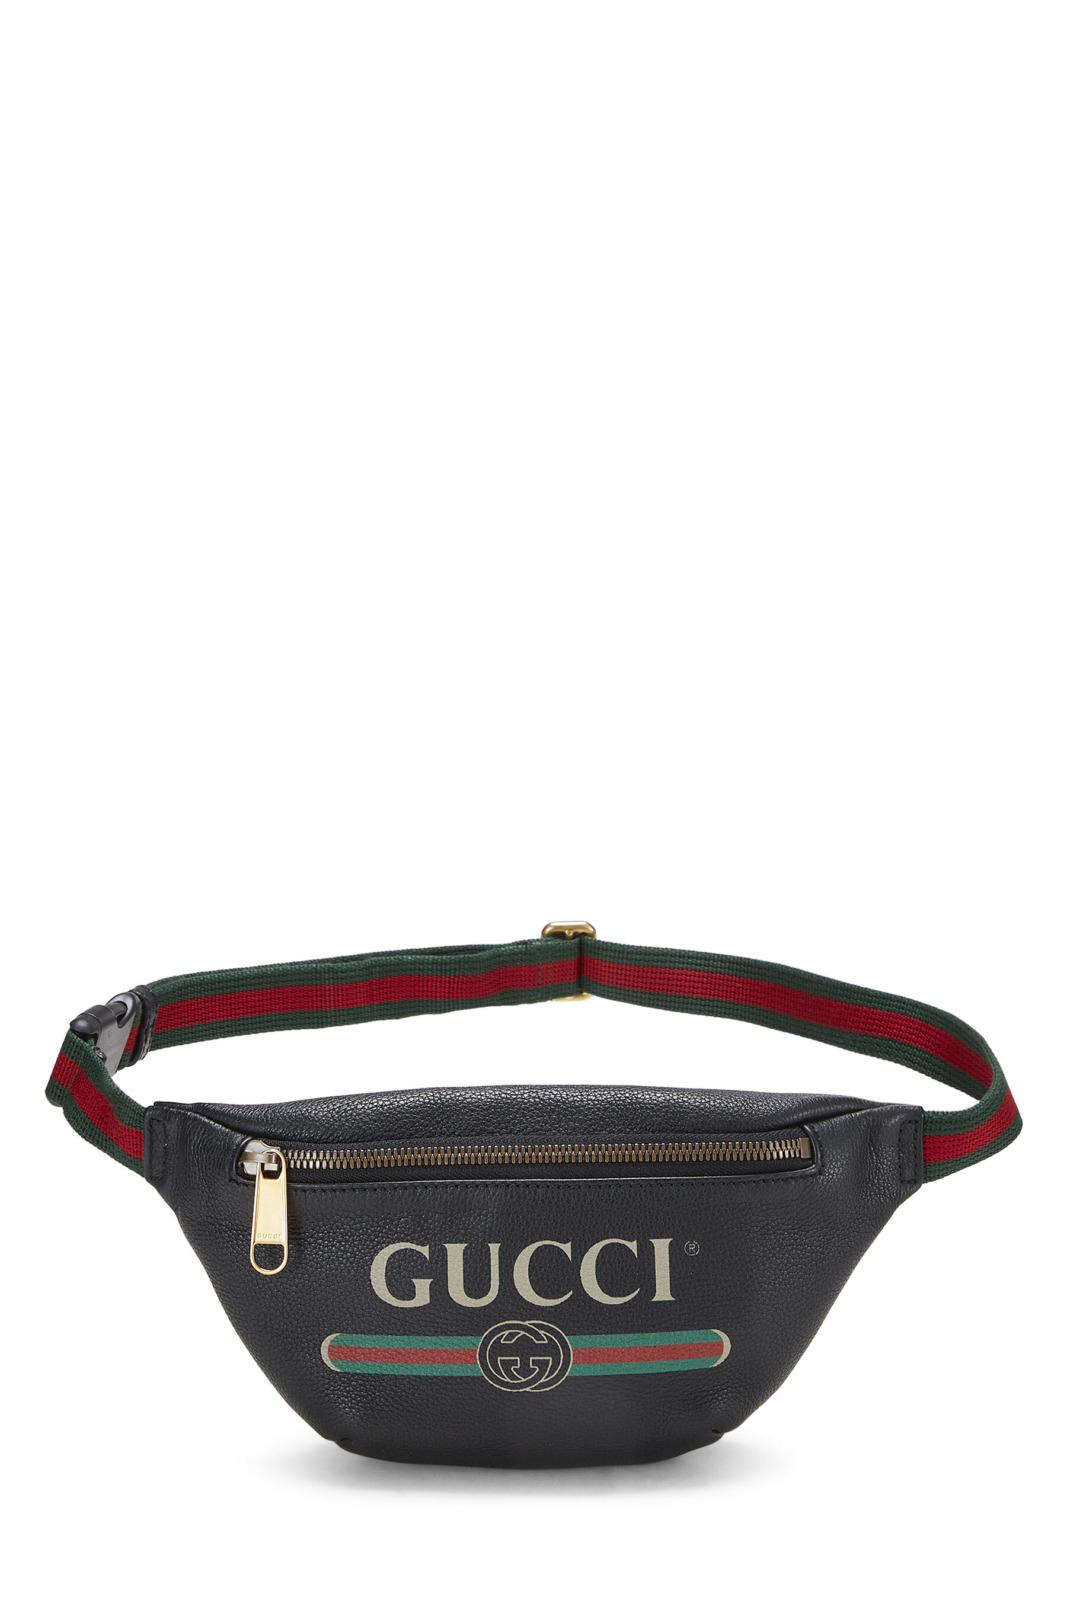 WGACA Woman Black Belt Bag by Gucci GOOFASH